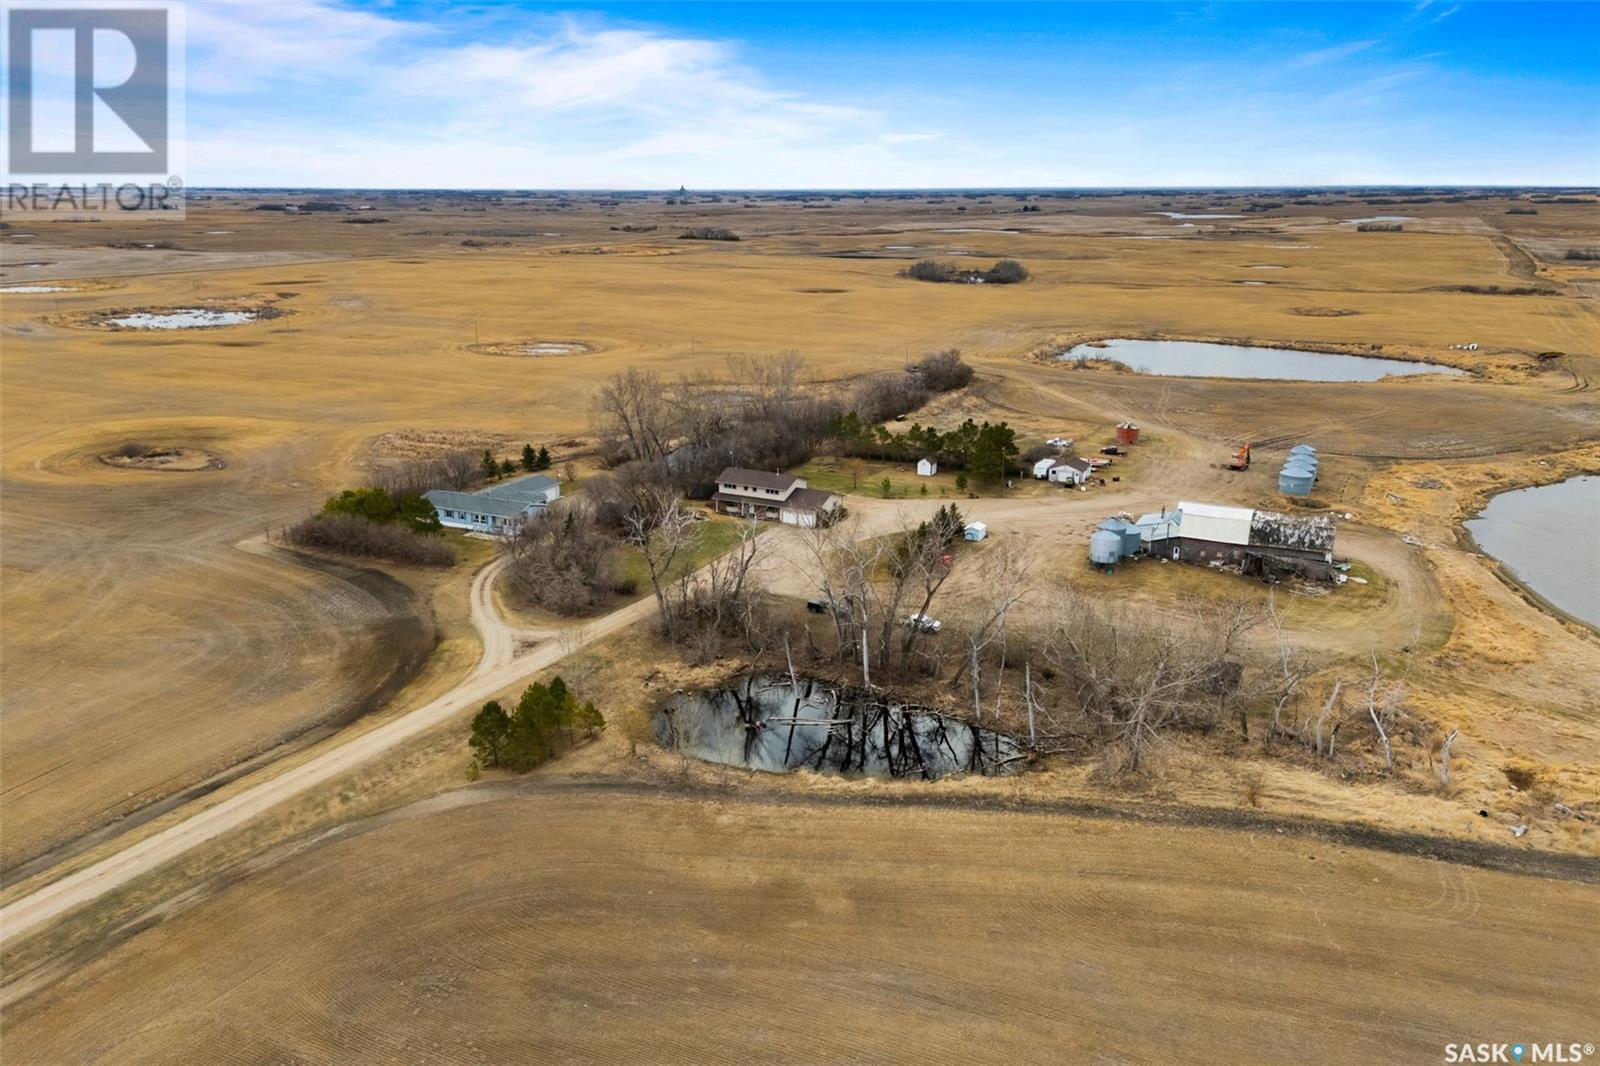 158 Acres with House & Yard - Fuessel, longlaketon rm no. 219, Saskatchewan